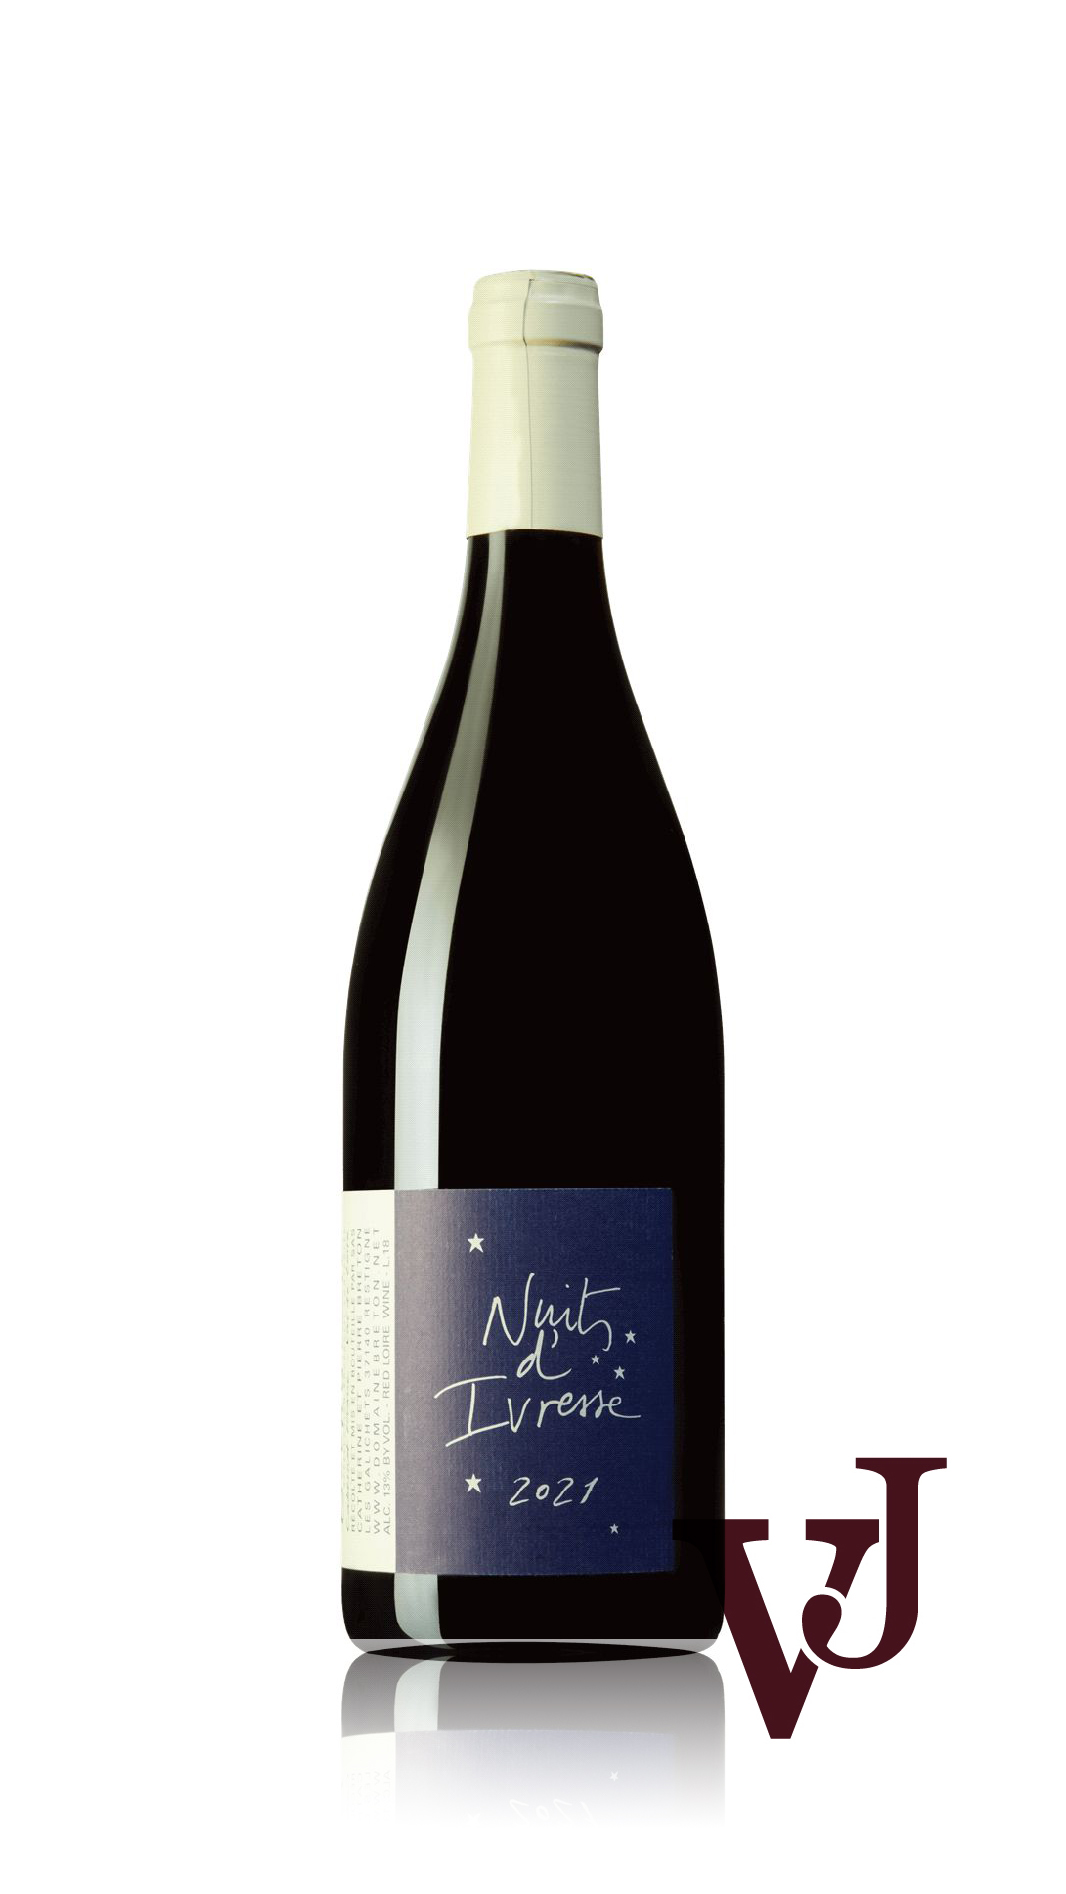 Rött Vin - Bourgeuil Nuits d'Ivresse 2021 artikel nummer 9485901 från producenten Domaine Catherine et Pierre Breton från området Frankrike